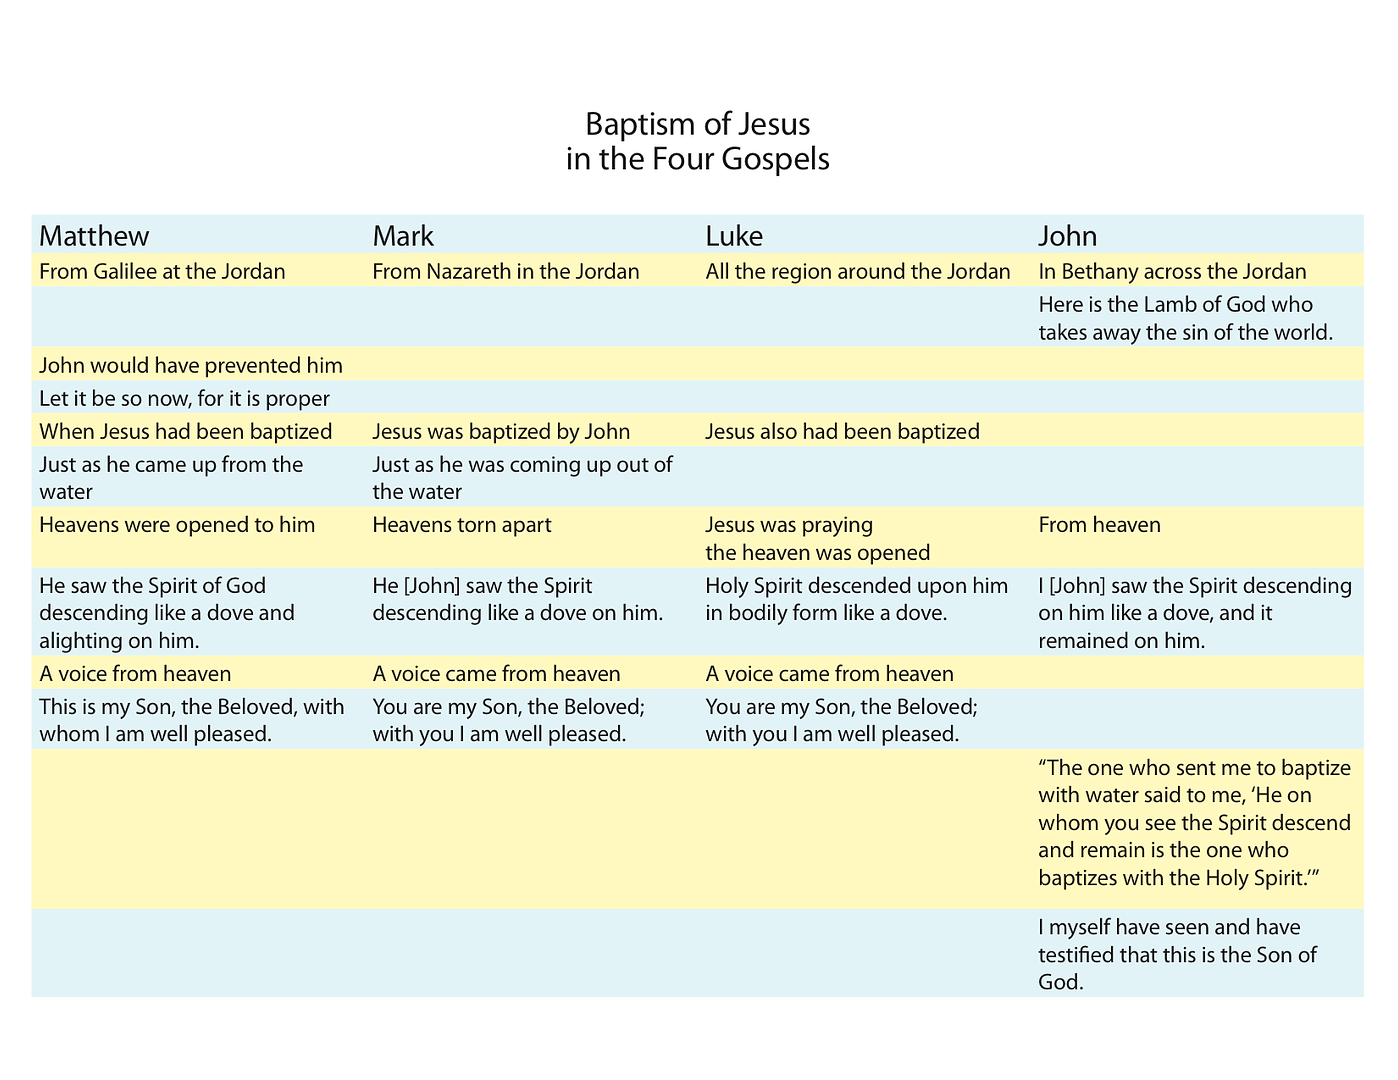 baptism of Jesus gospels chart